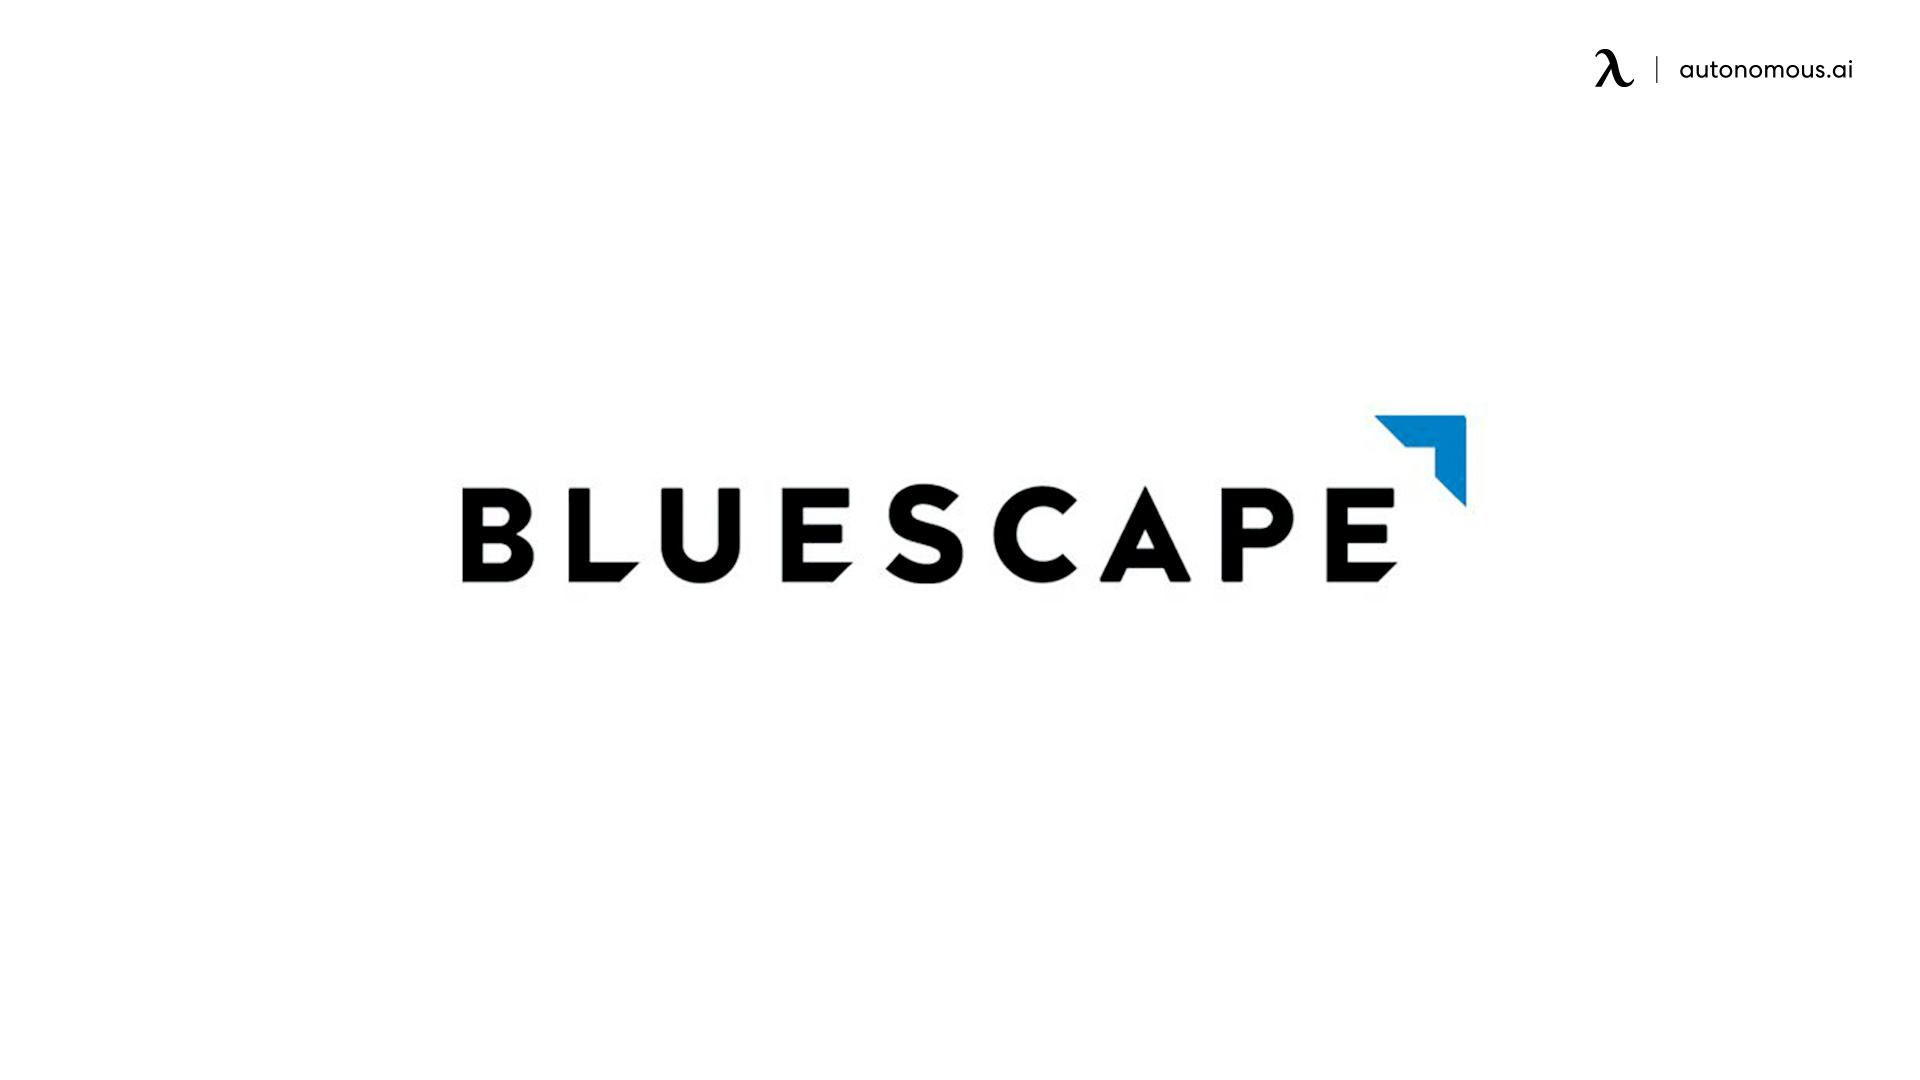 Bluescape